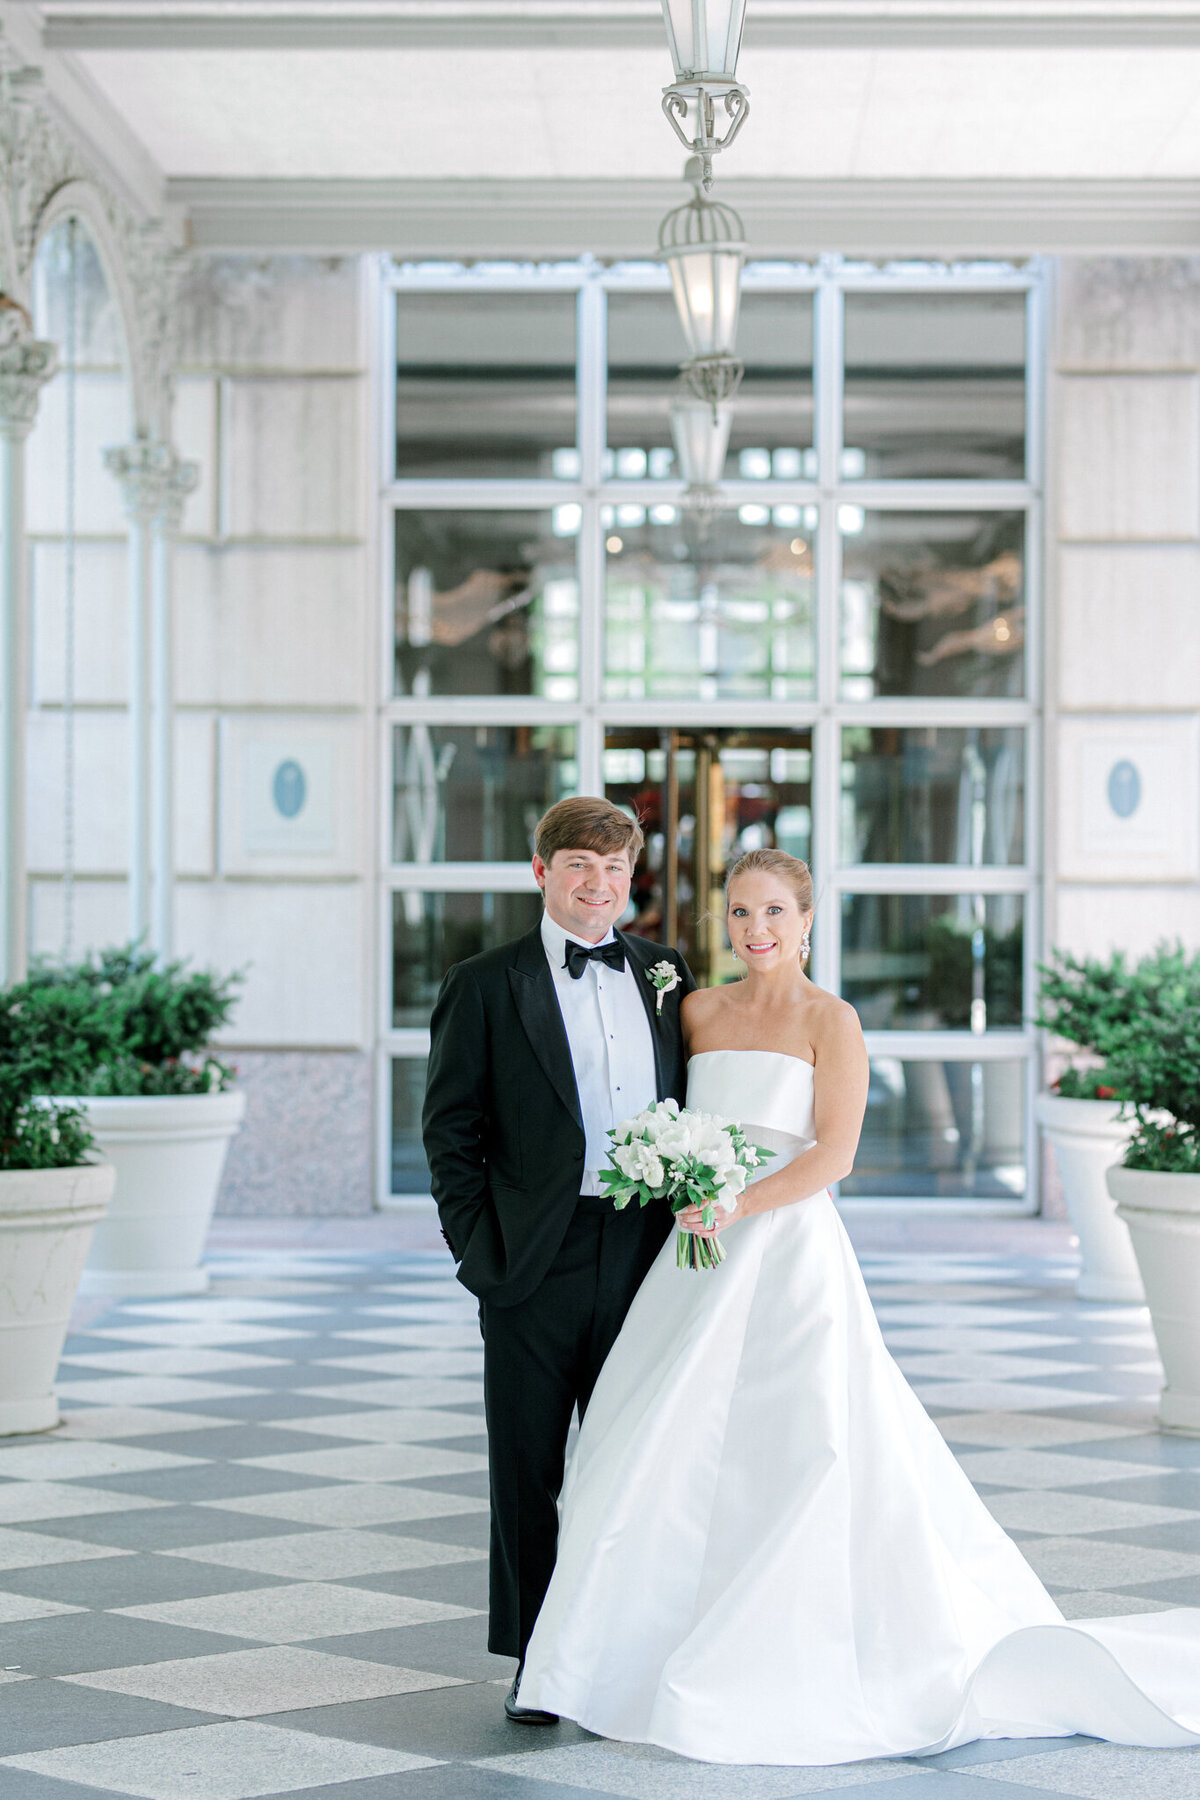 Hannah & Jason's Wedding at Hotel Crescent Court Club Perkins Chapel | Dallas Wedding Photographer | Sami Kathryn Photography-11